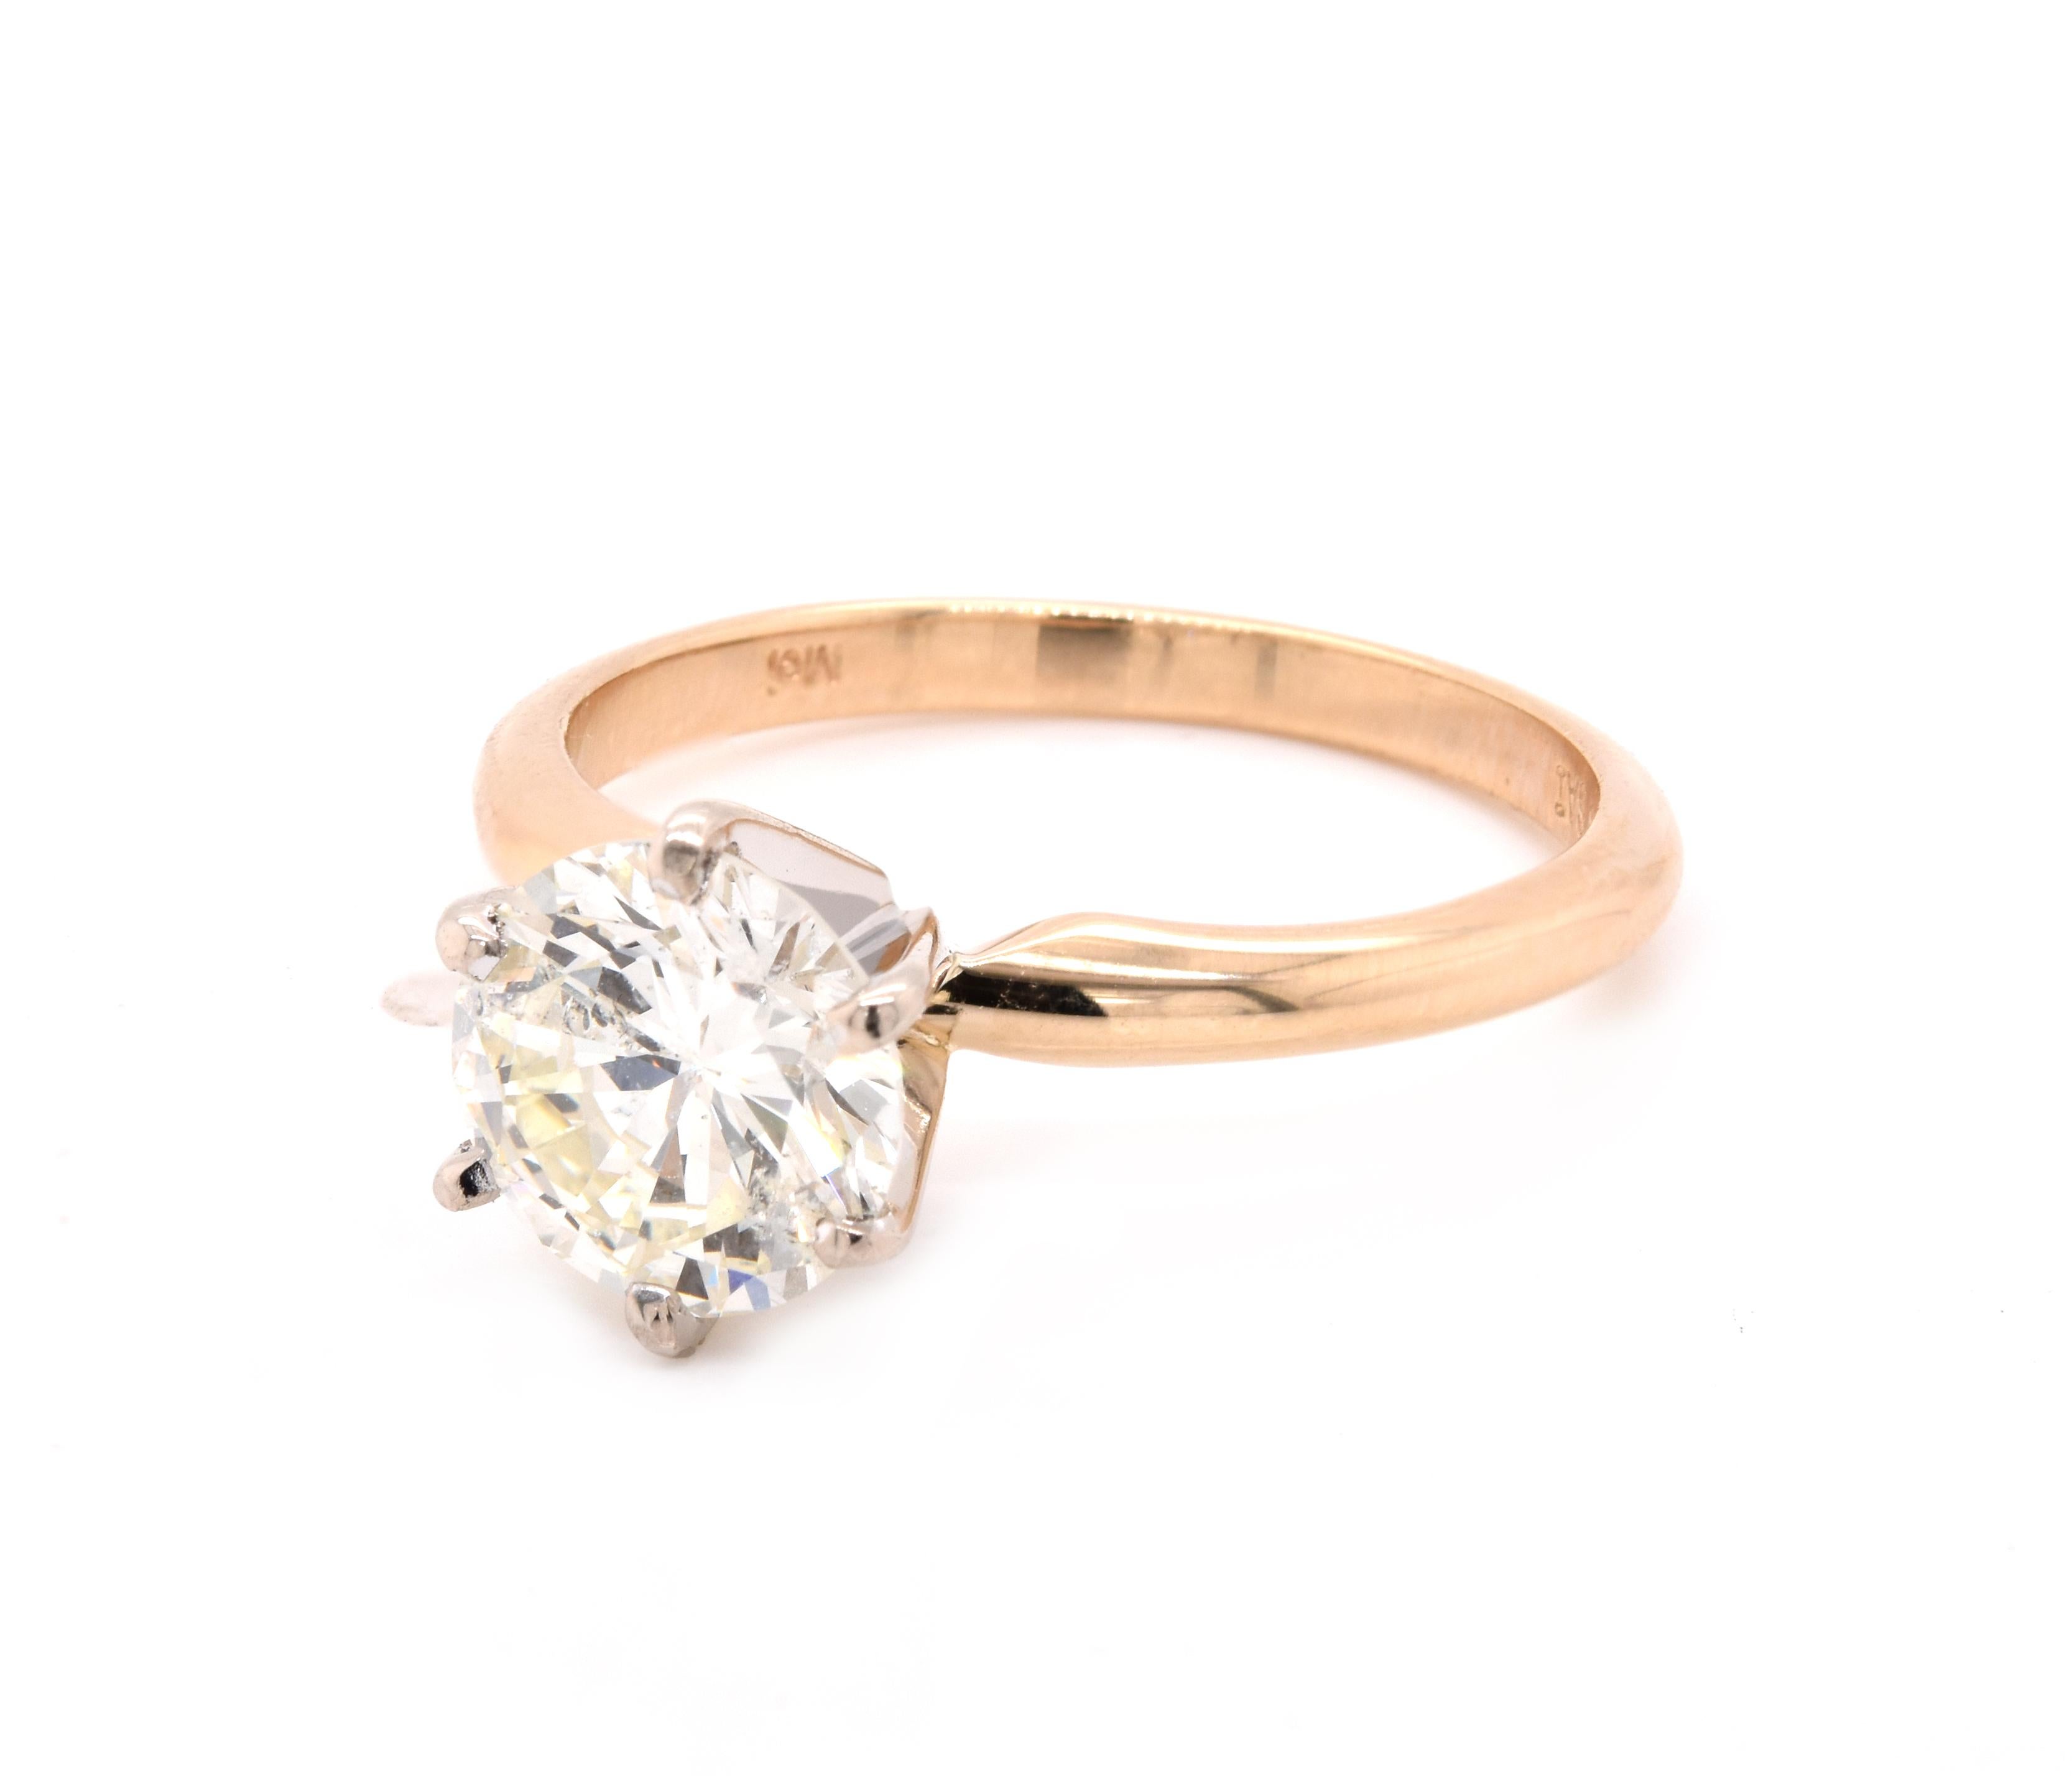 yellow gold diamond engagement rings